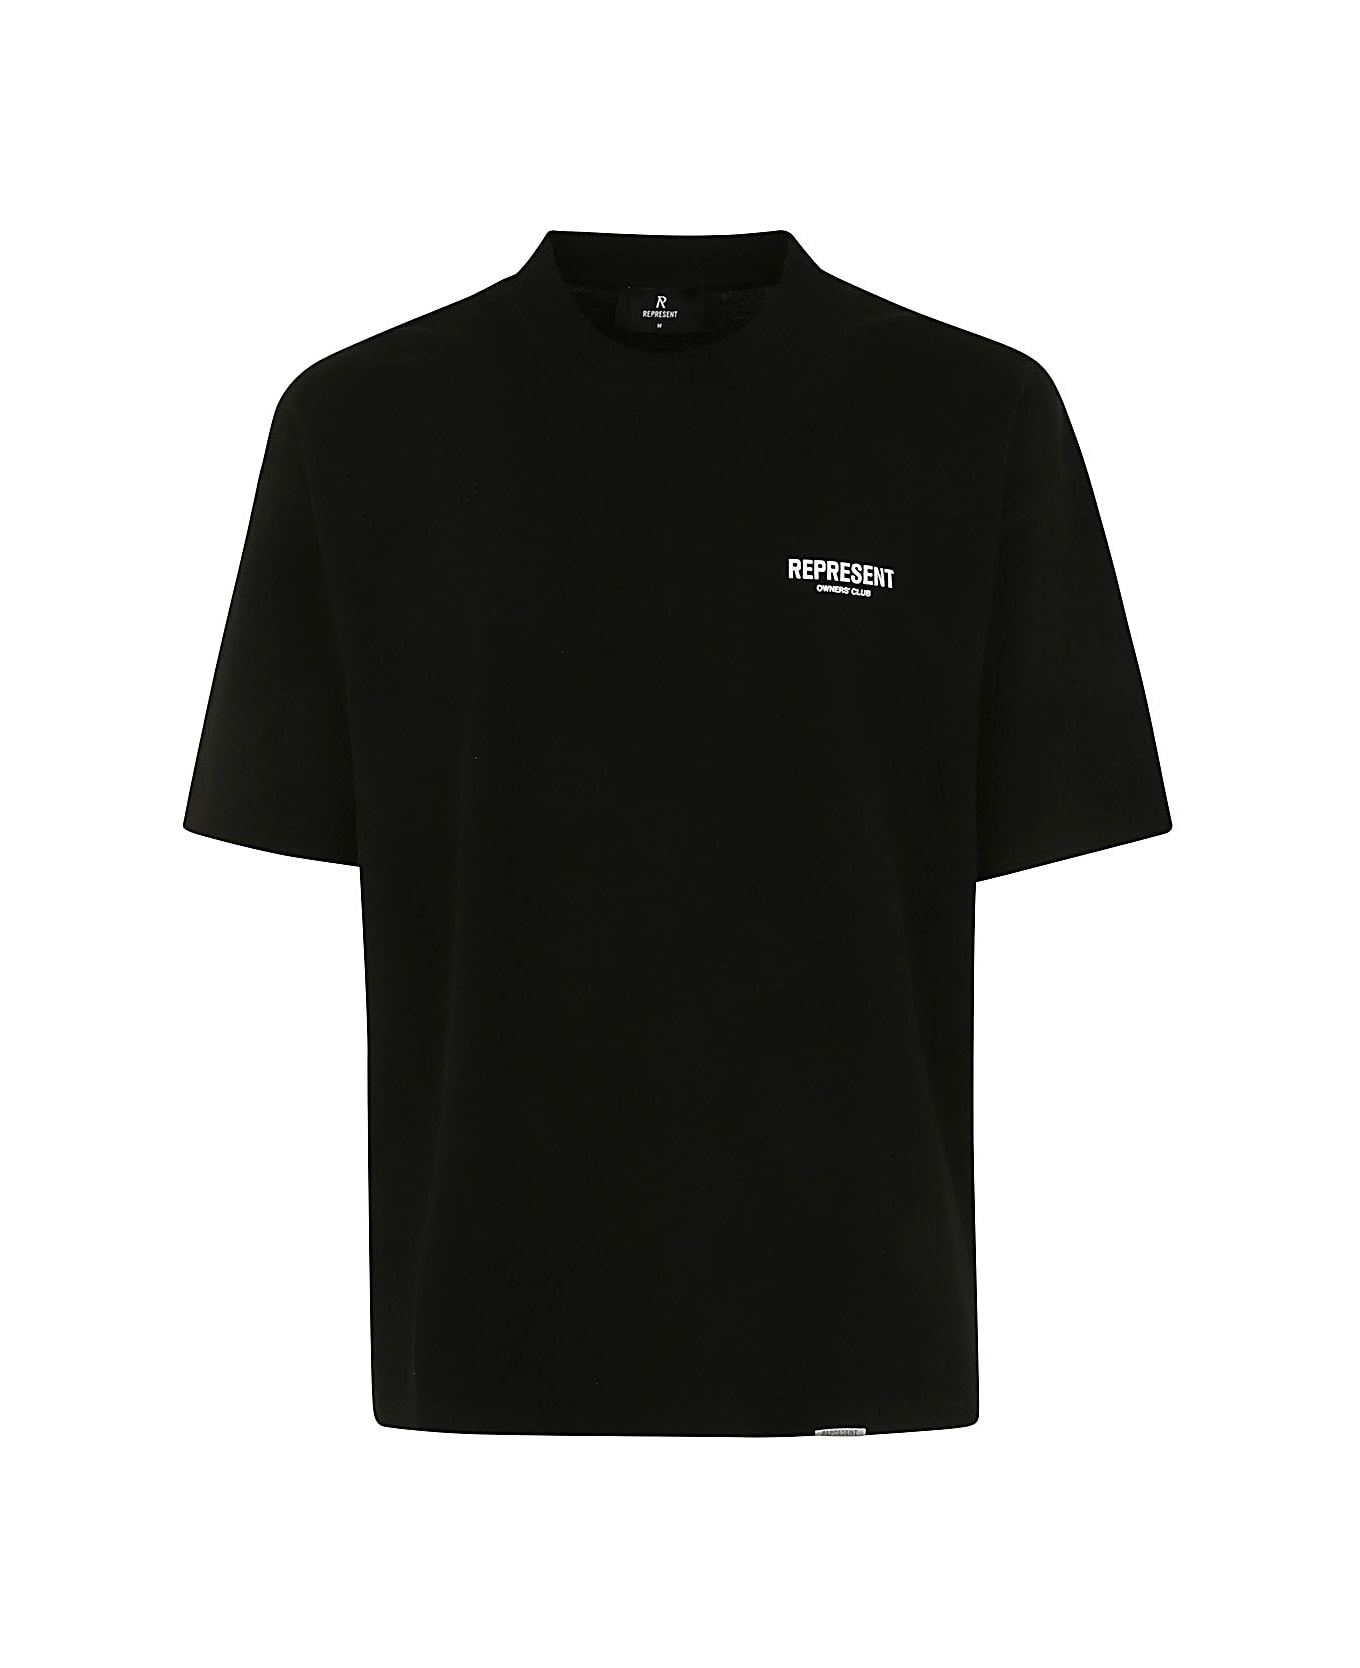 REPRESENT Owners Club T-shirt - Black